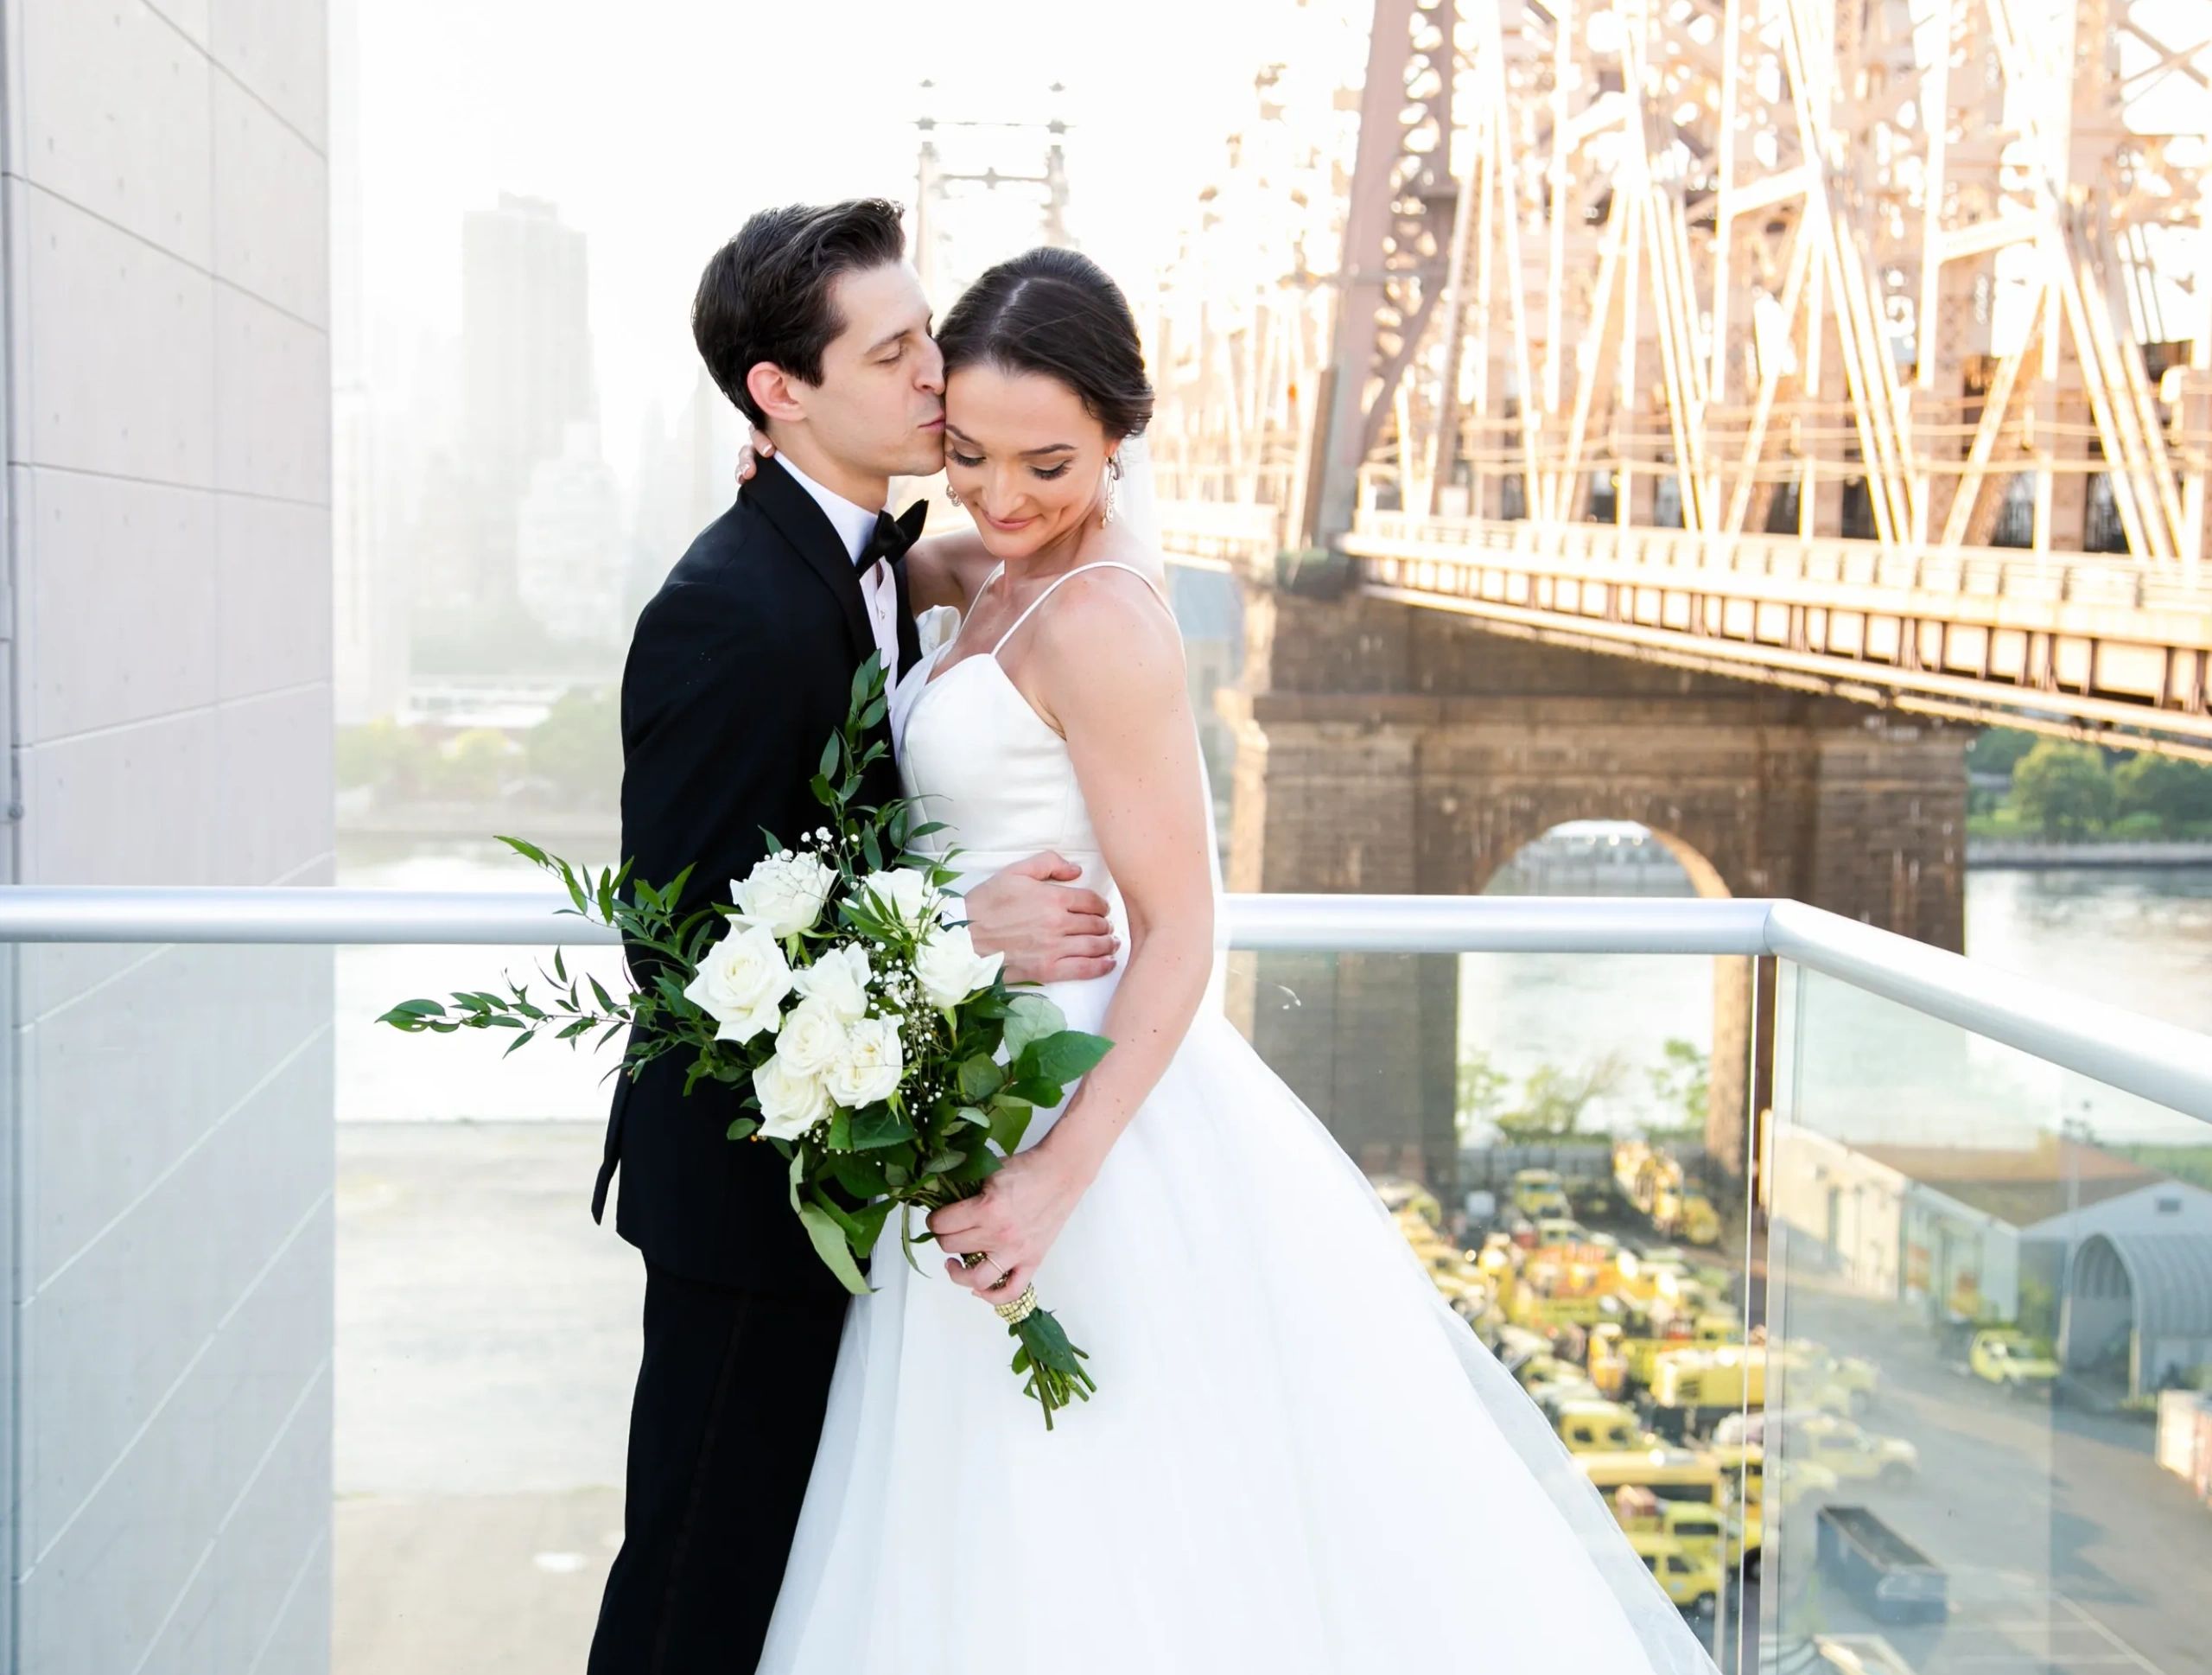 Wedding Photography, Bride and Groom Photography, Professional Wedding Portraits